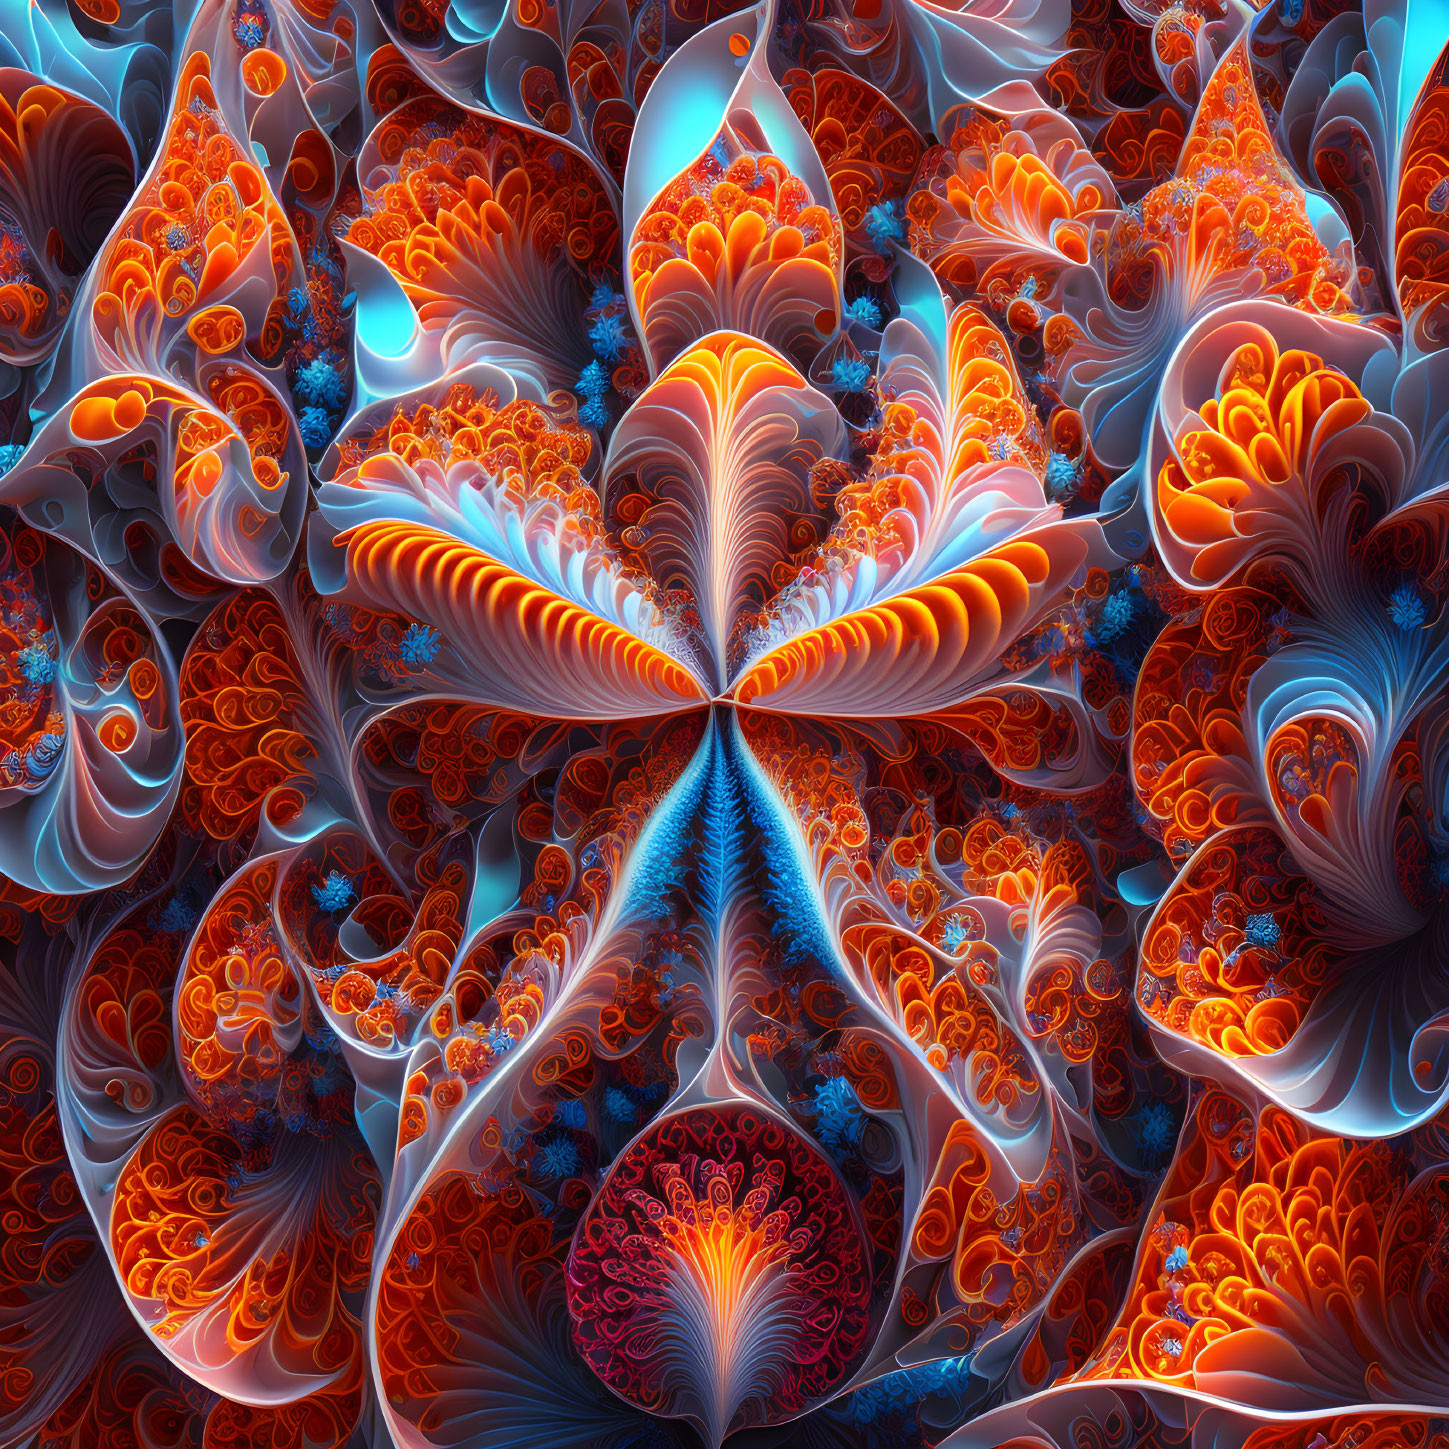 Symmetrical orange and blue fractal patterns in intricate design